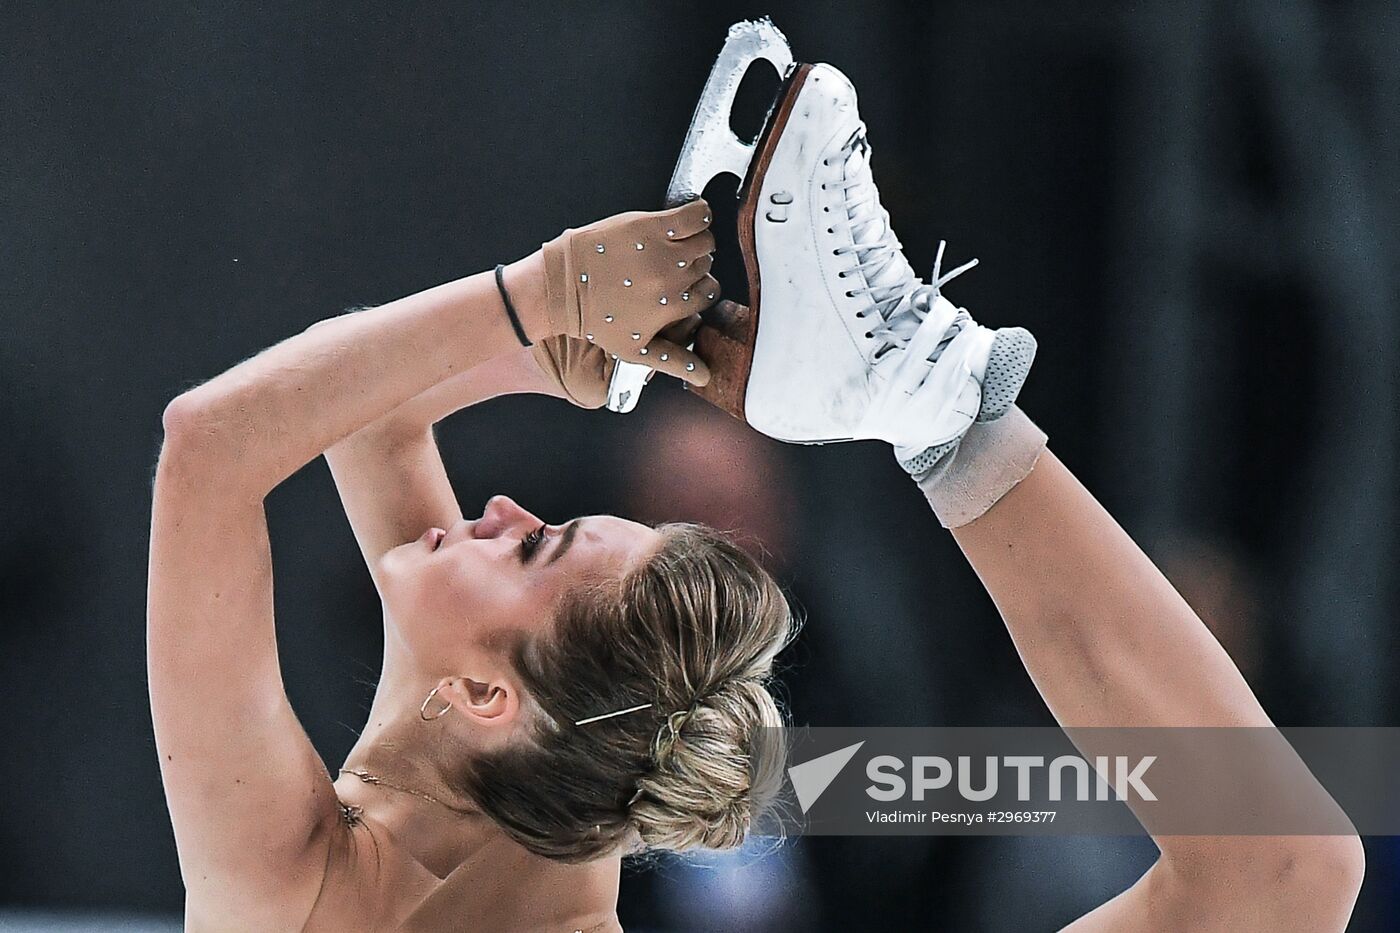 Grand Prix of Figure Skating. Stage 3. Women's free skating